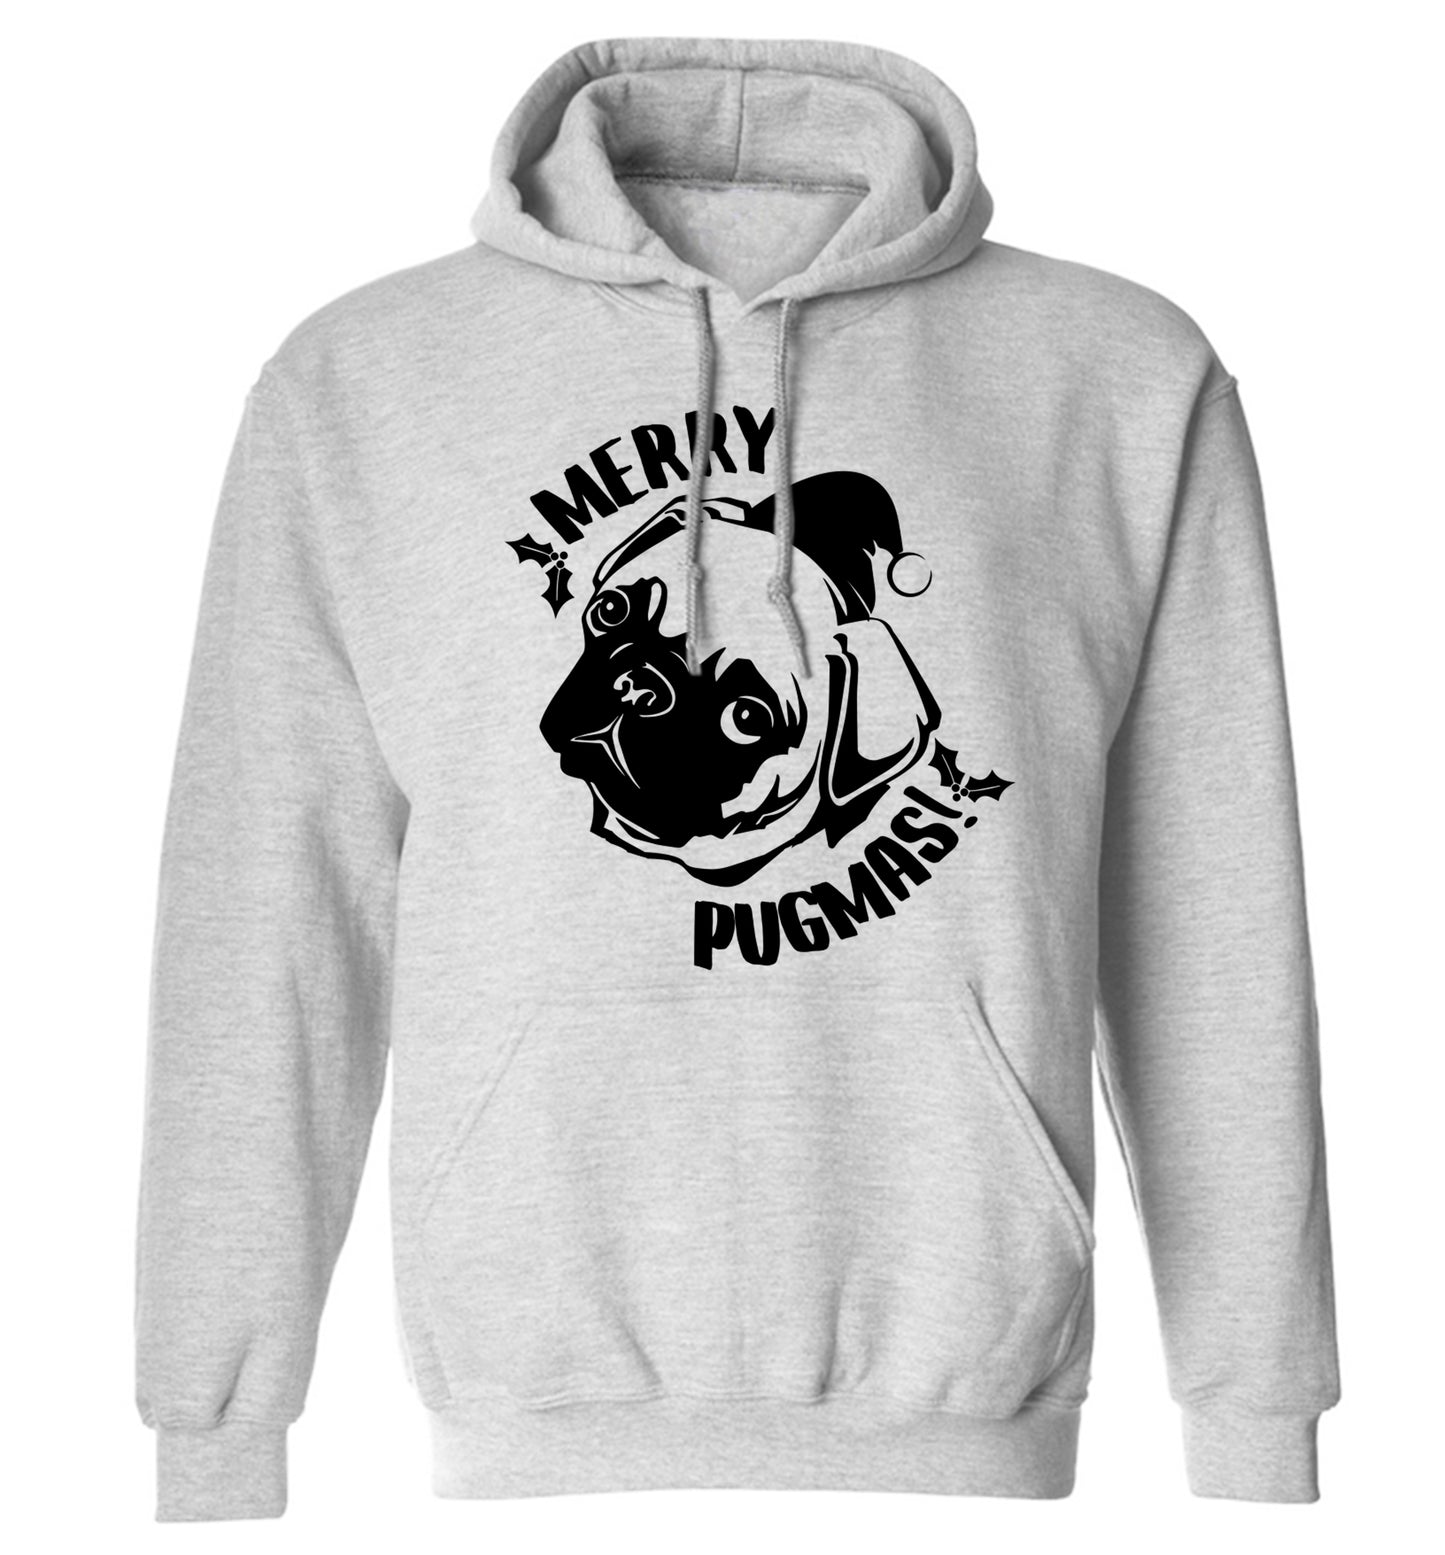 Merry Pugmas adults unisex grey hoodie 2XL